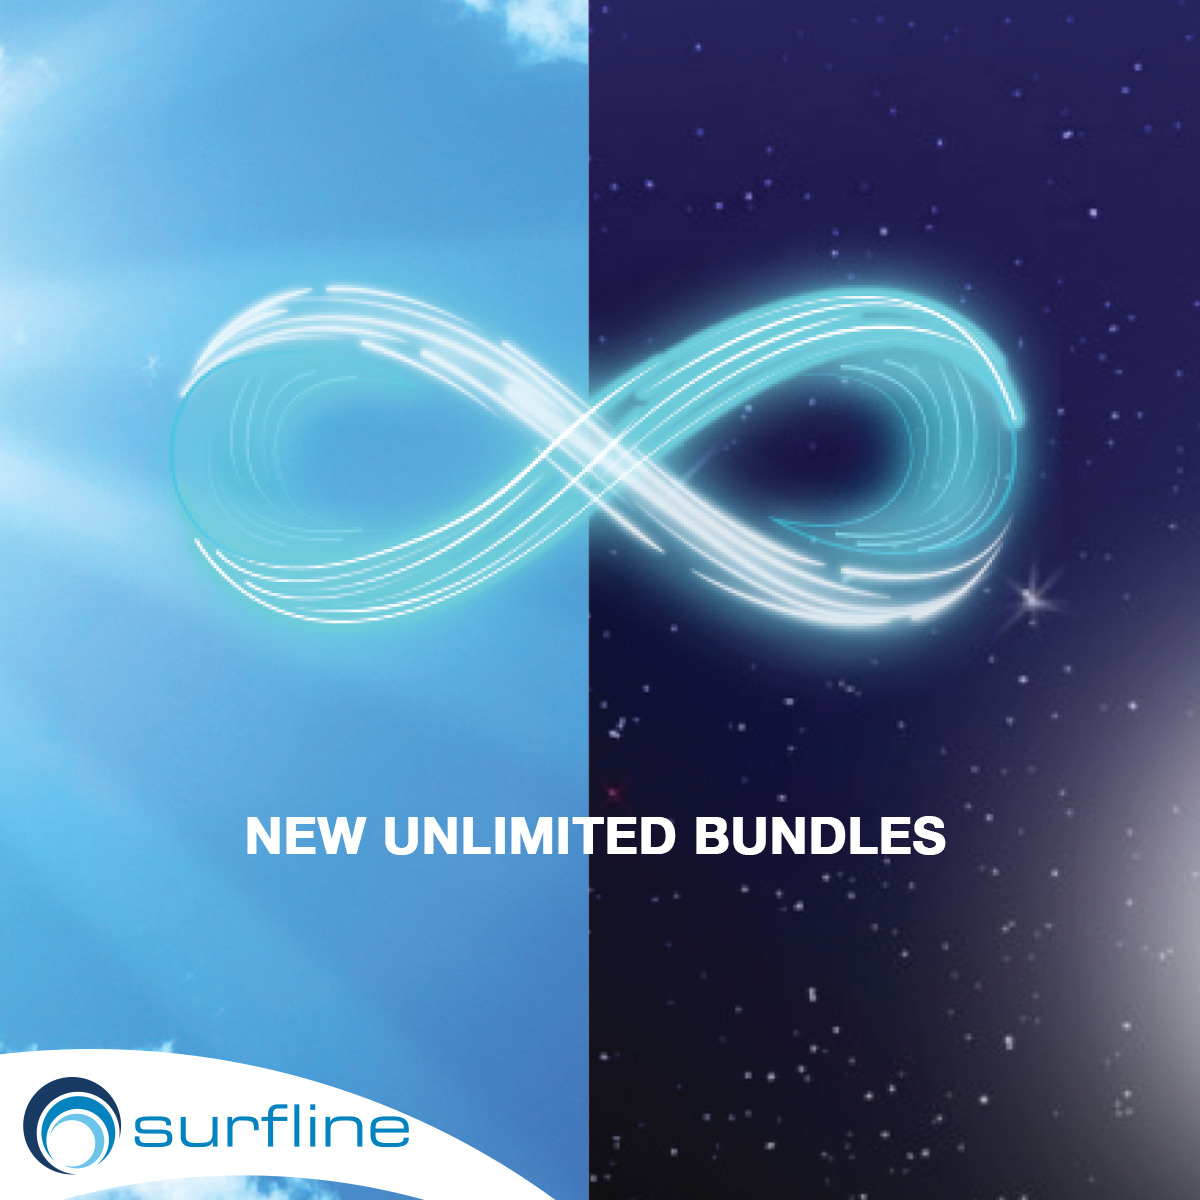 Surfline Unlimited 4g Lte Internet